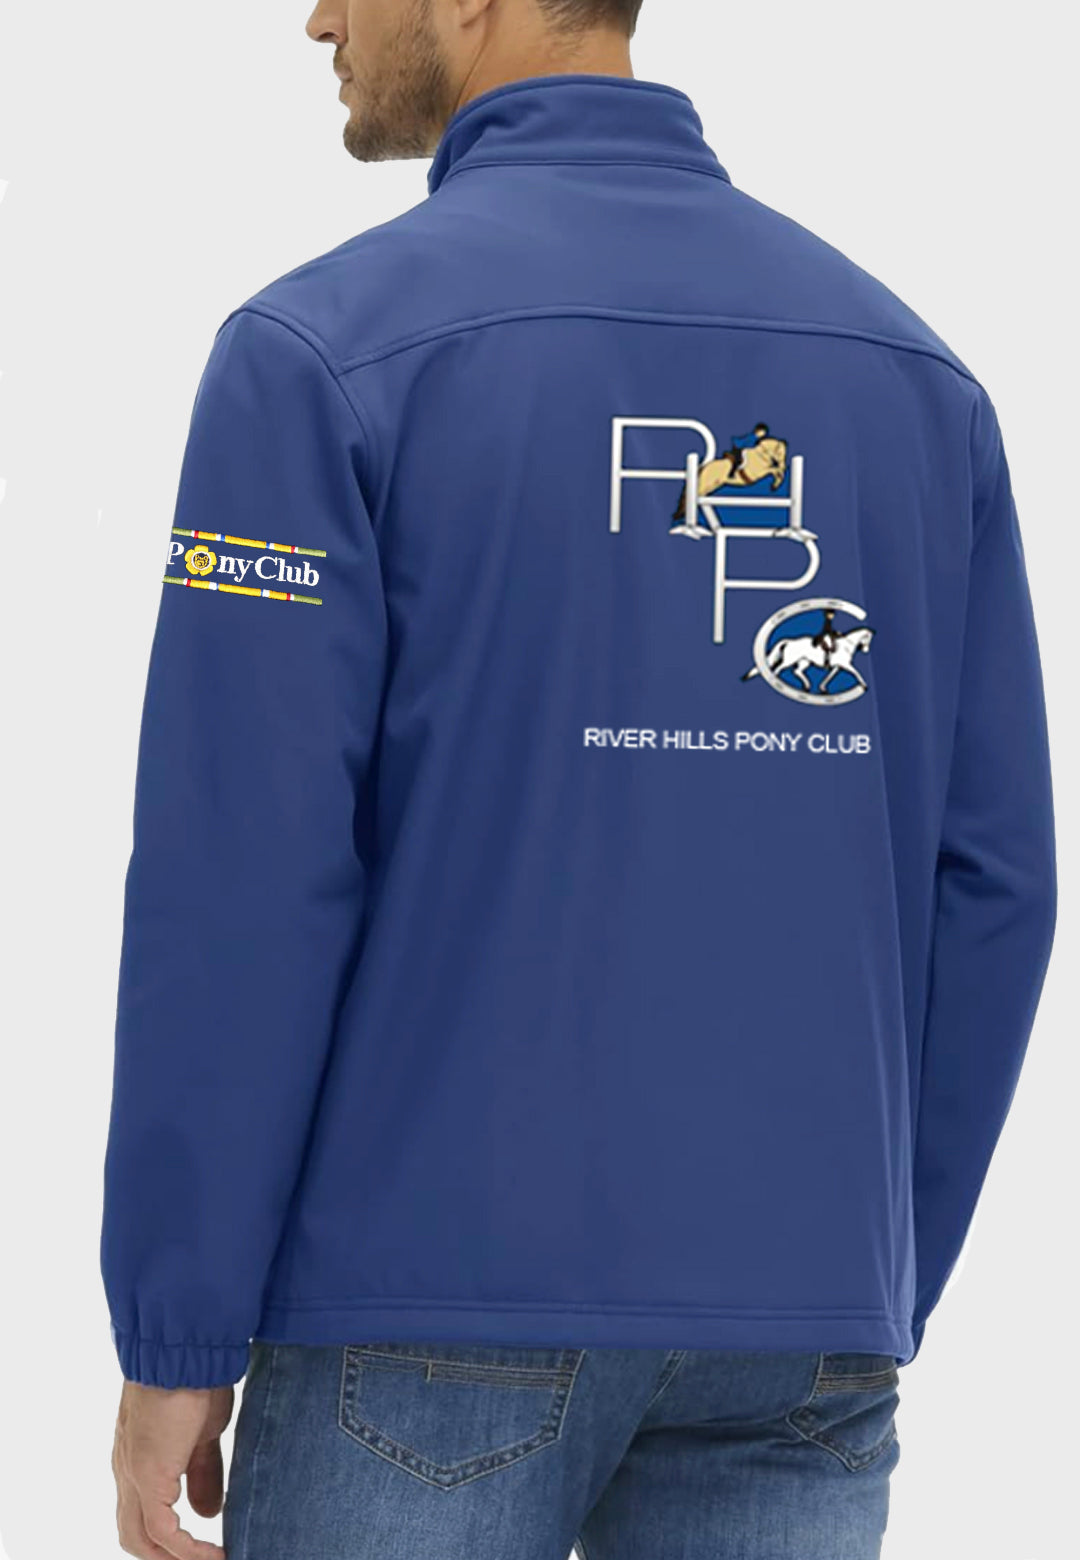 River Hills Pony Club TACVASEN Men's Softshell Fleece Lined Jacket